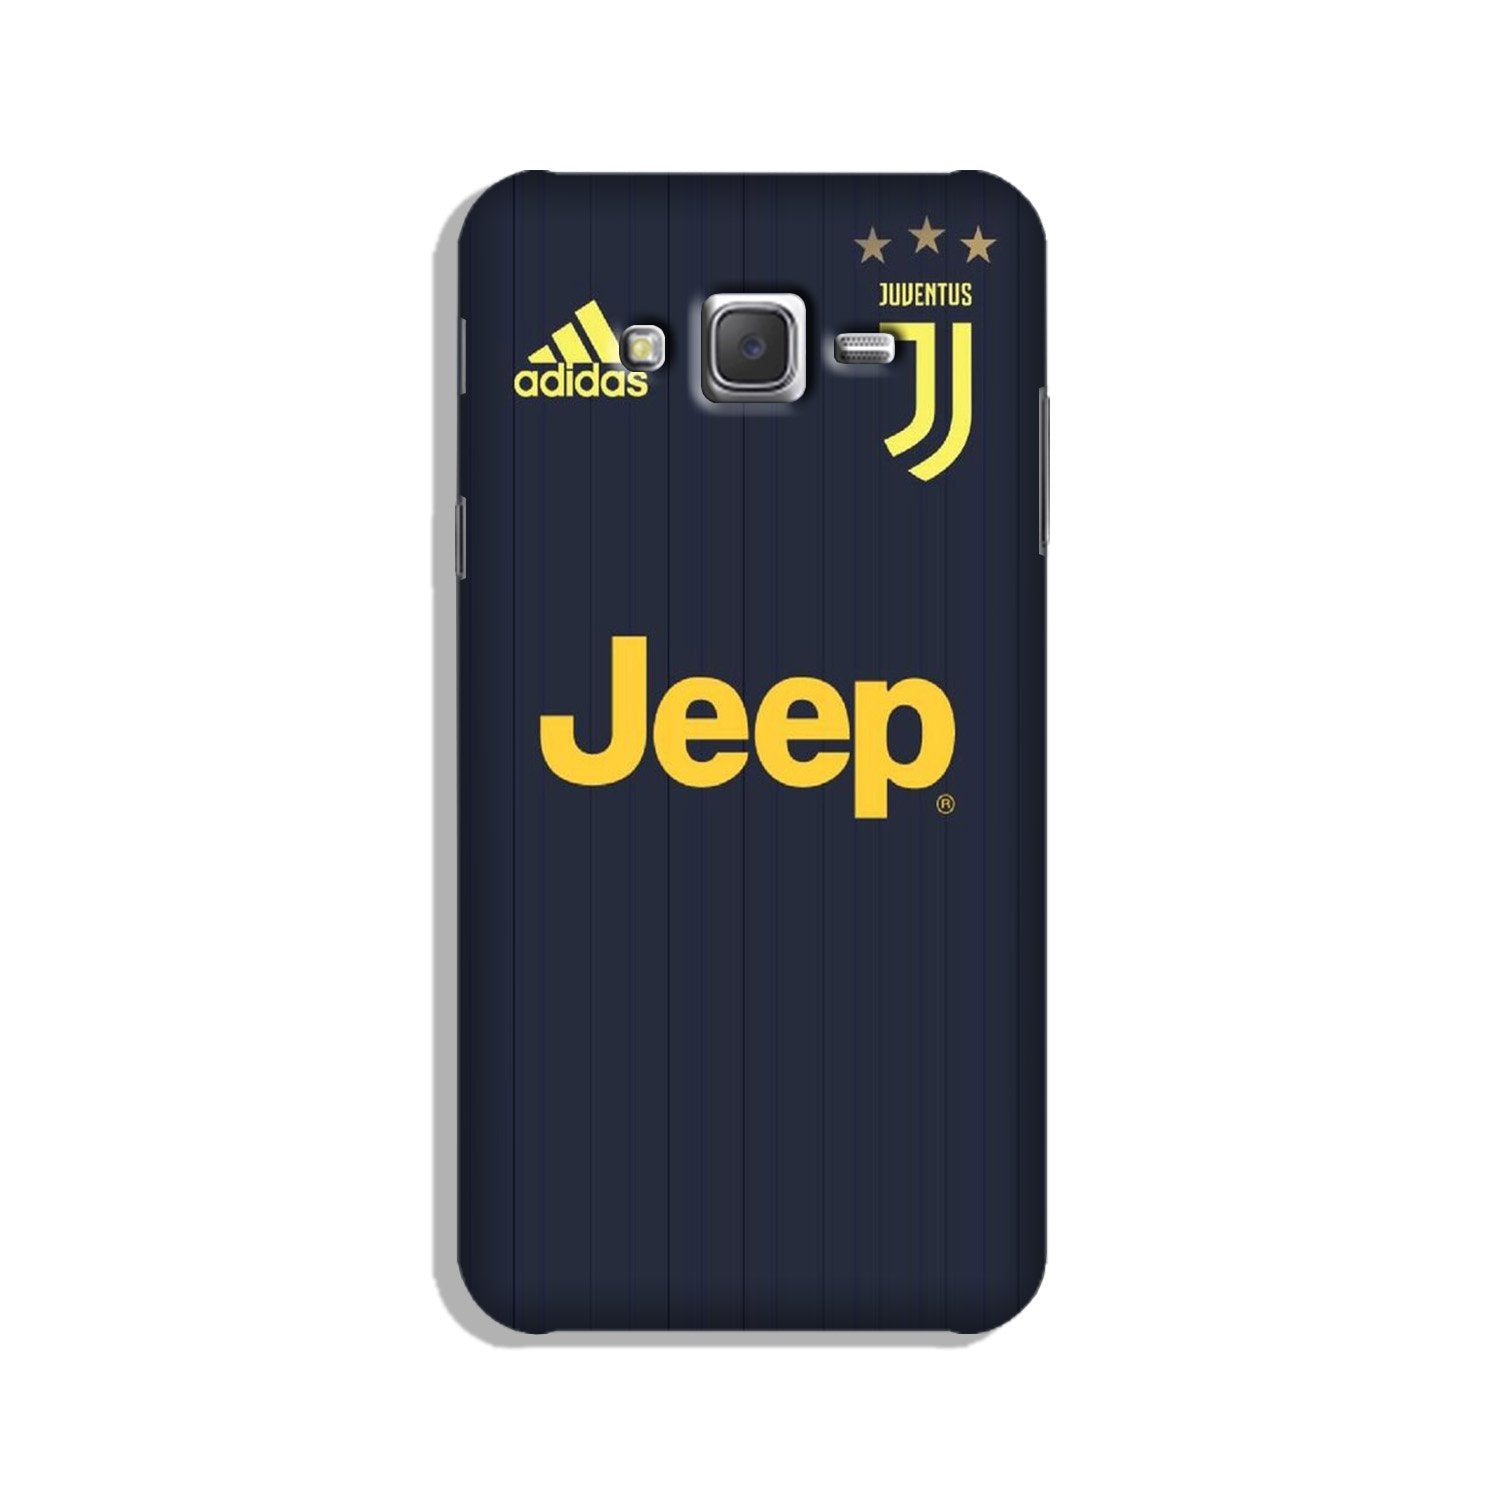 Jeep Juventus Case for Galaxy J3 (2015)  (Design - 161)